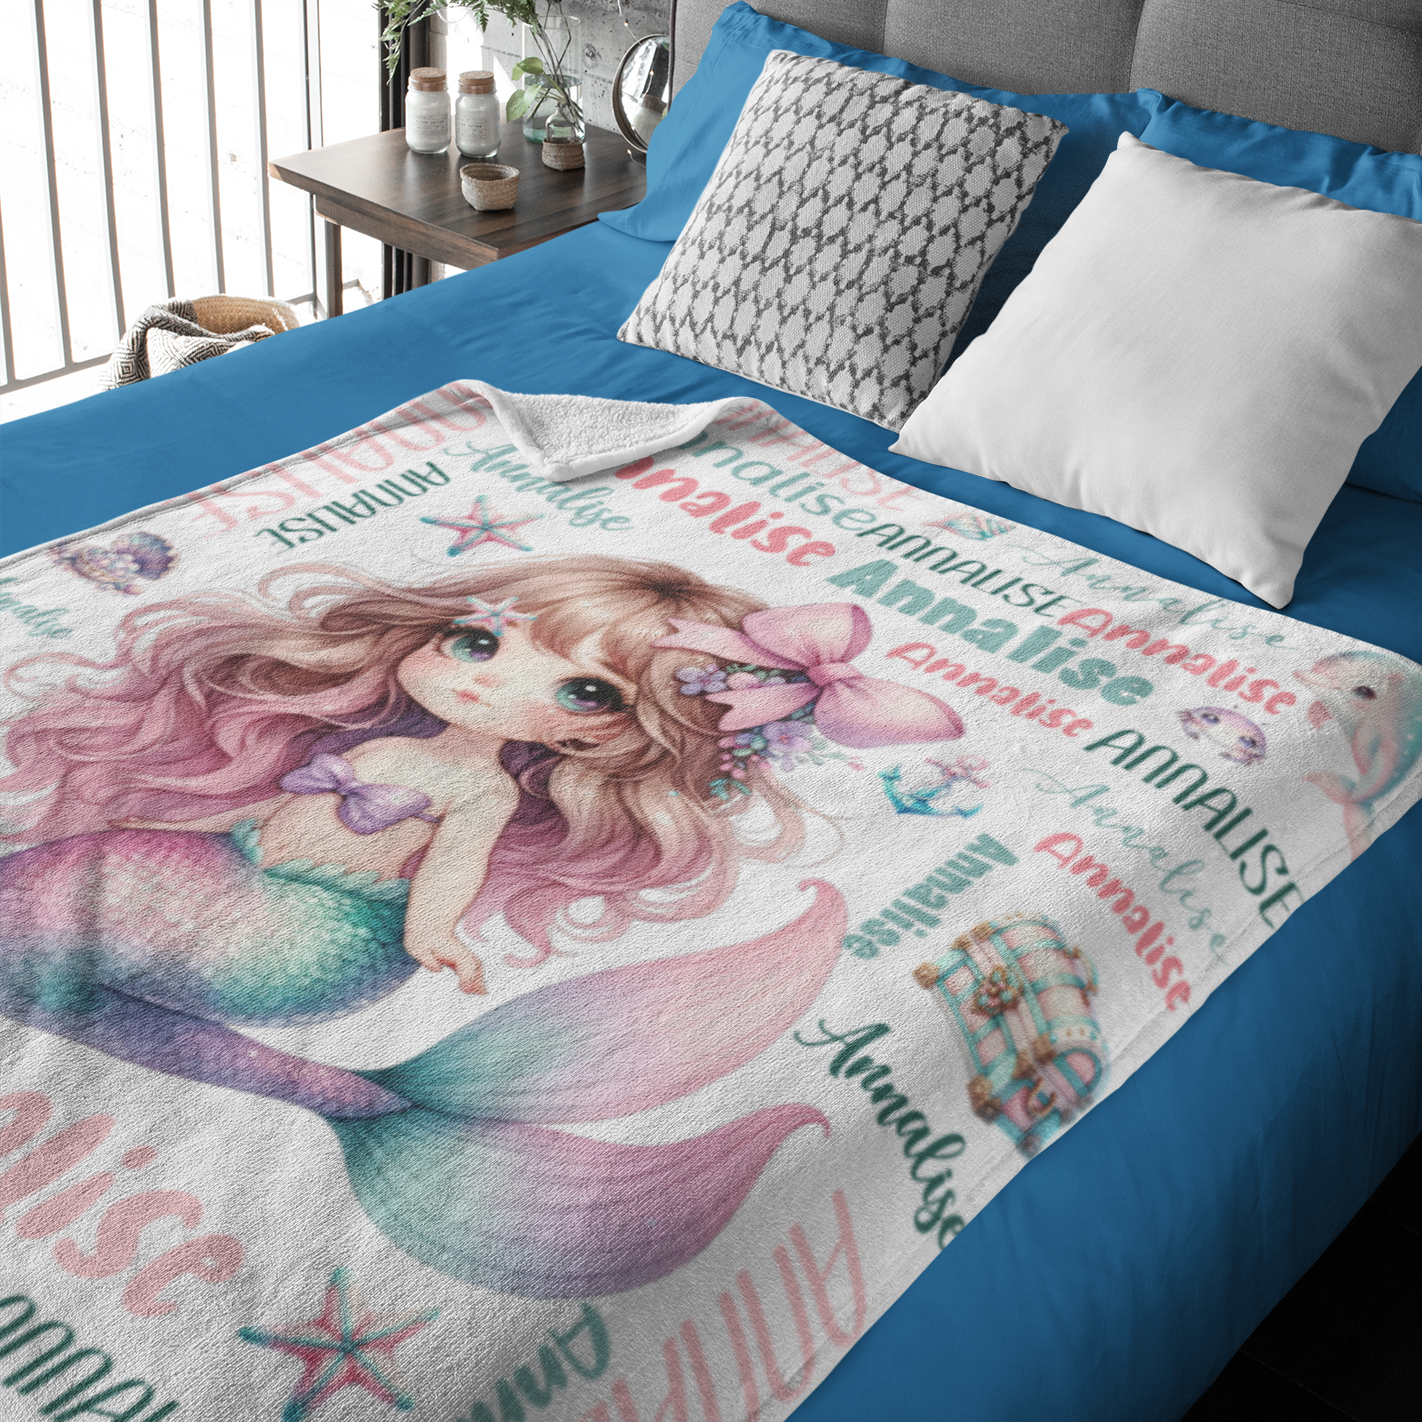 Personalized Watercolor Cute Mermaid Girl Name Blanket - Gift for Kids